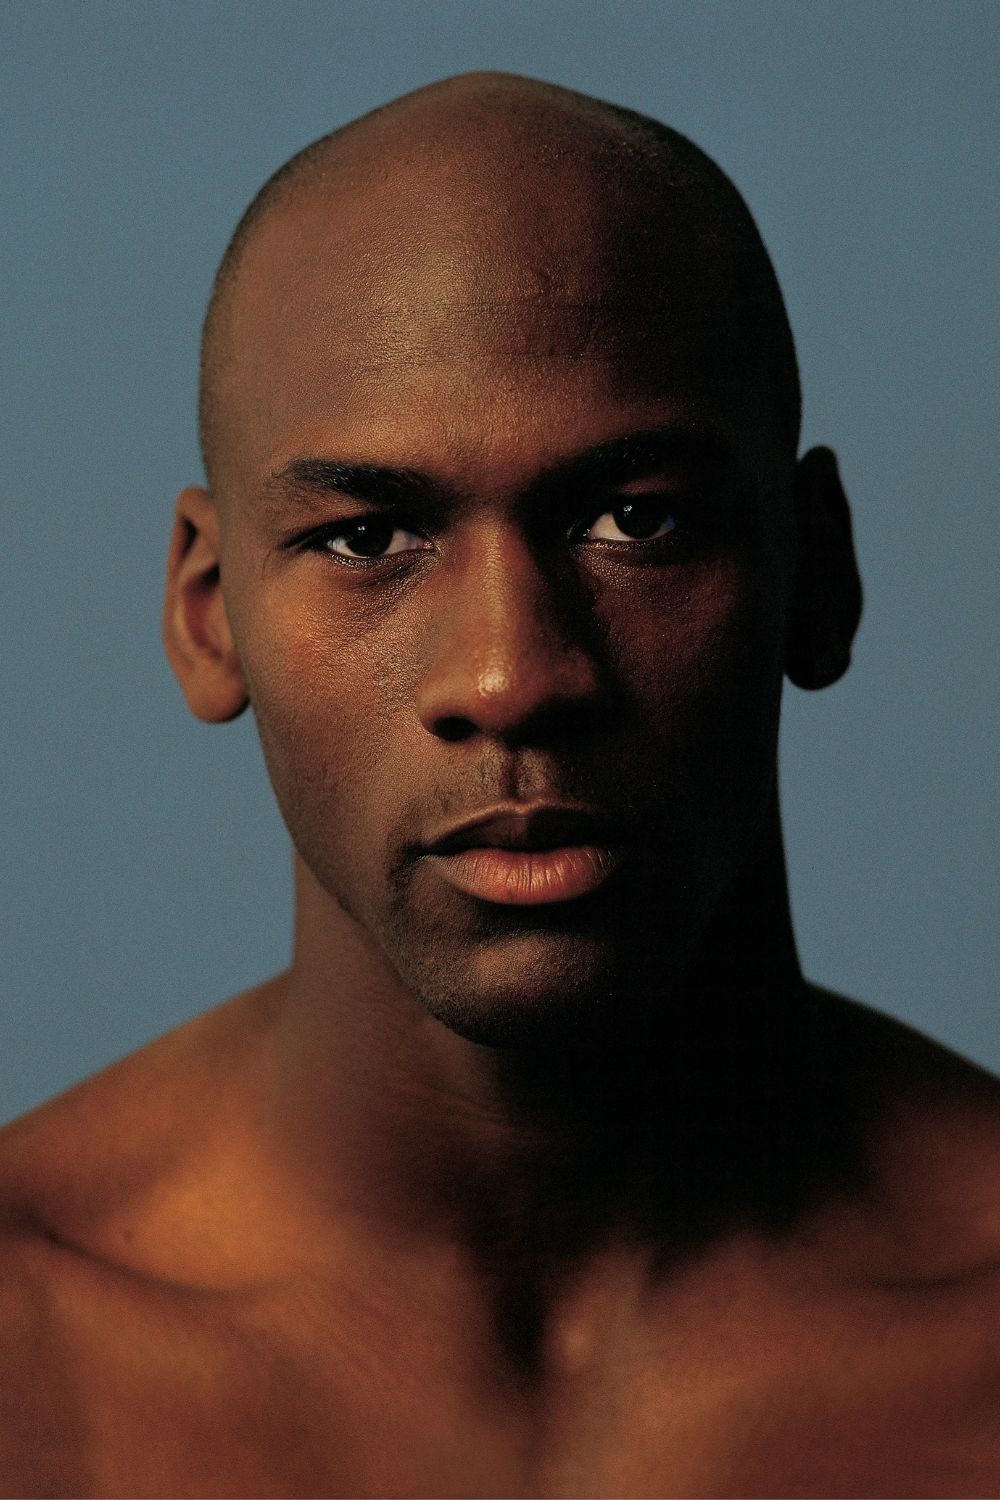 Michael Jordan Popularly Known As MJ